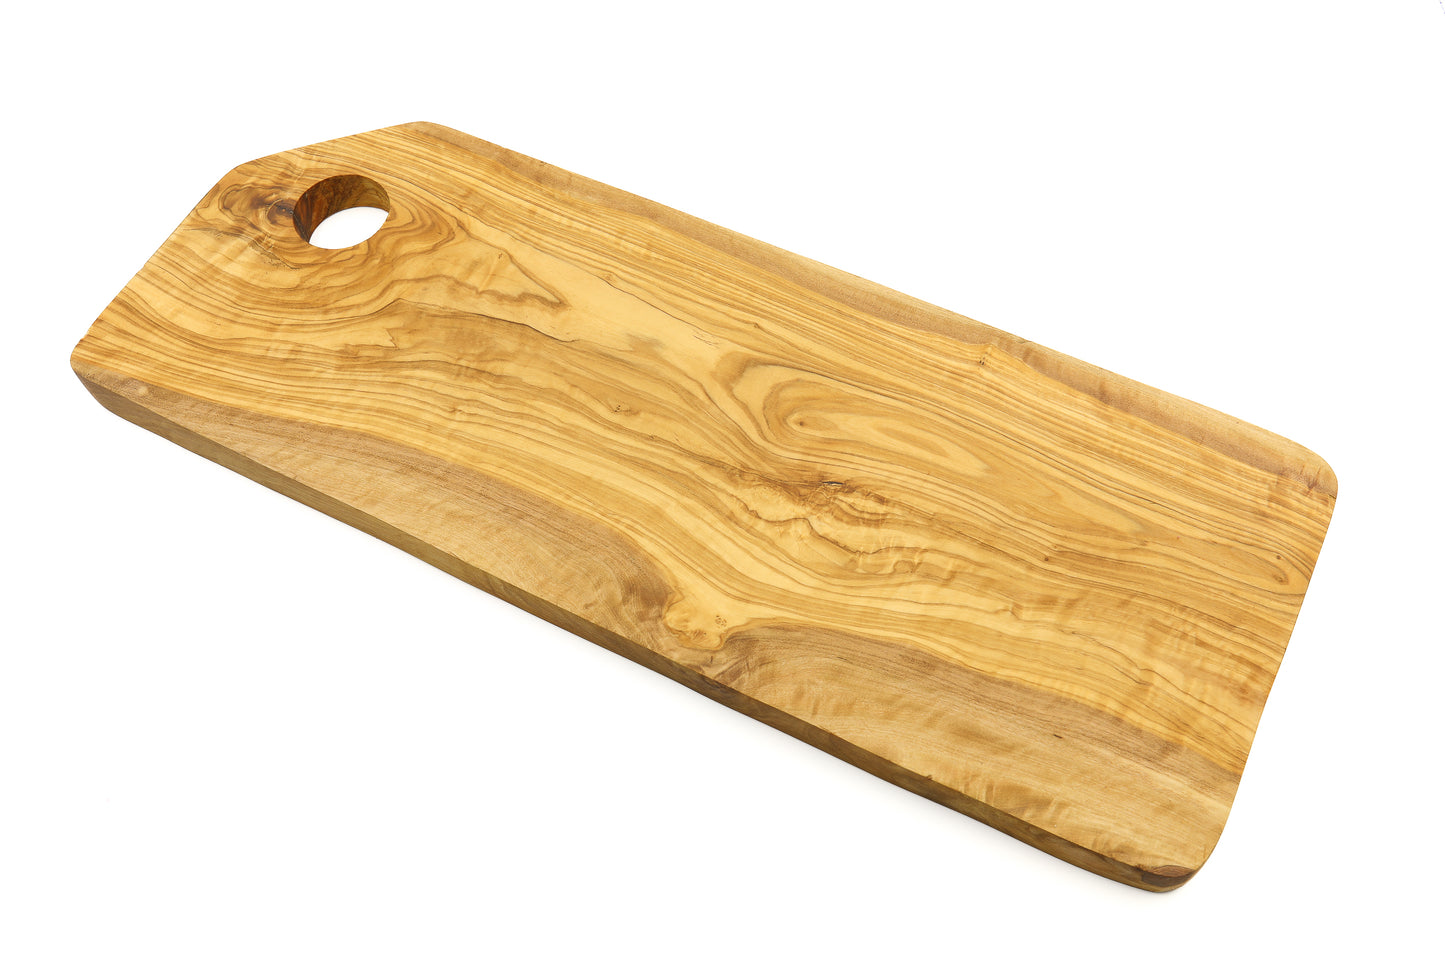 Rectangular olive wood cutting board featuring beveled edges